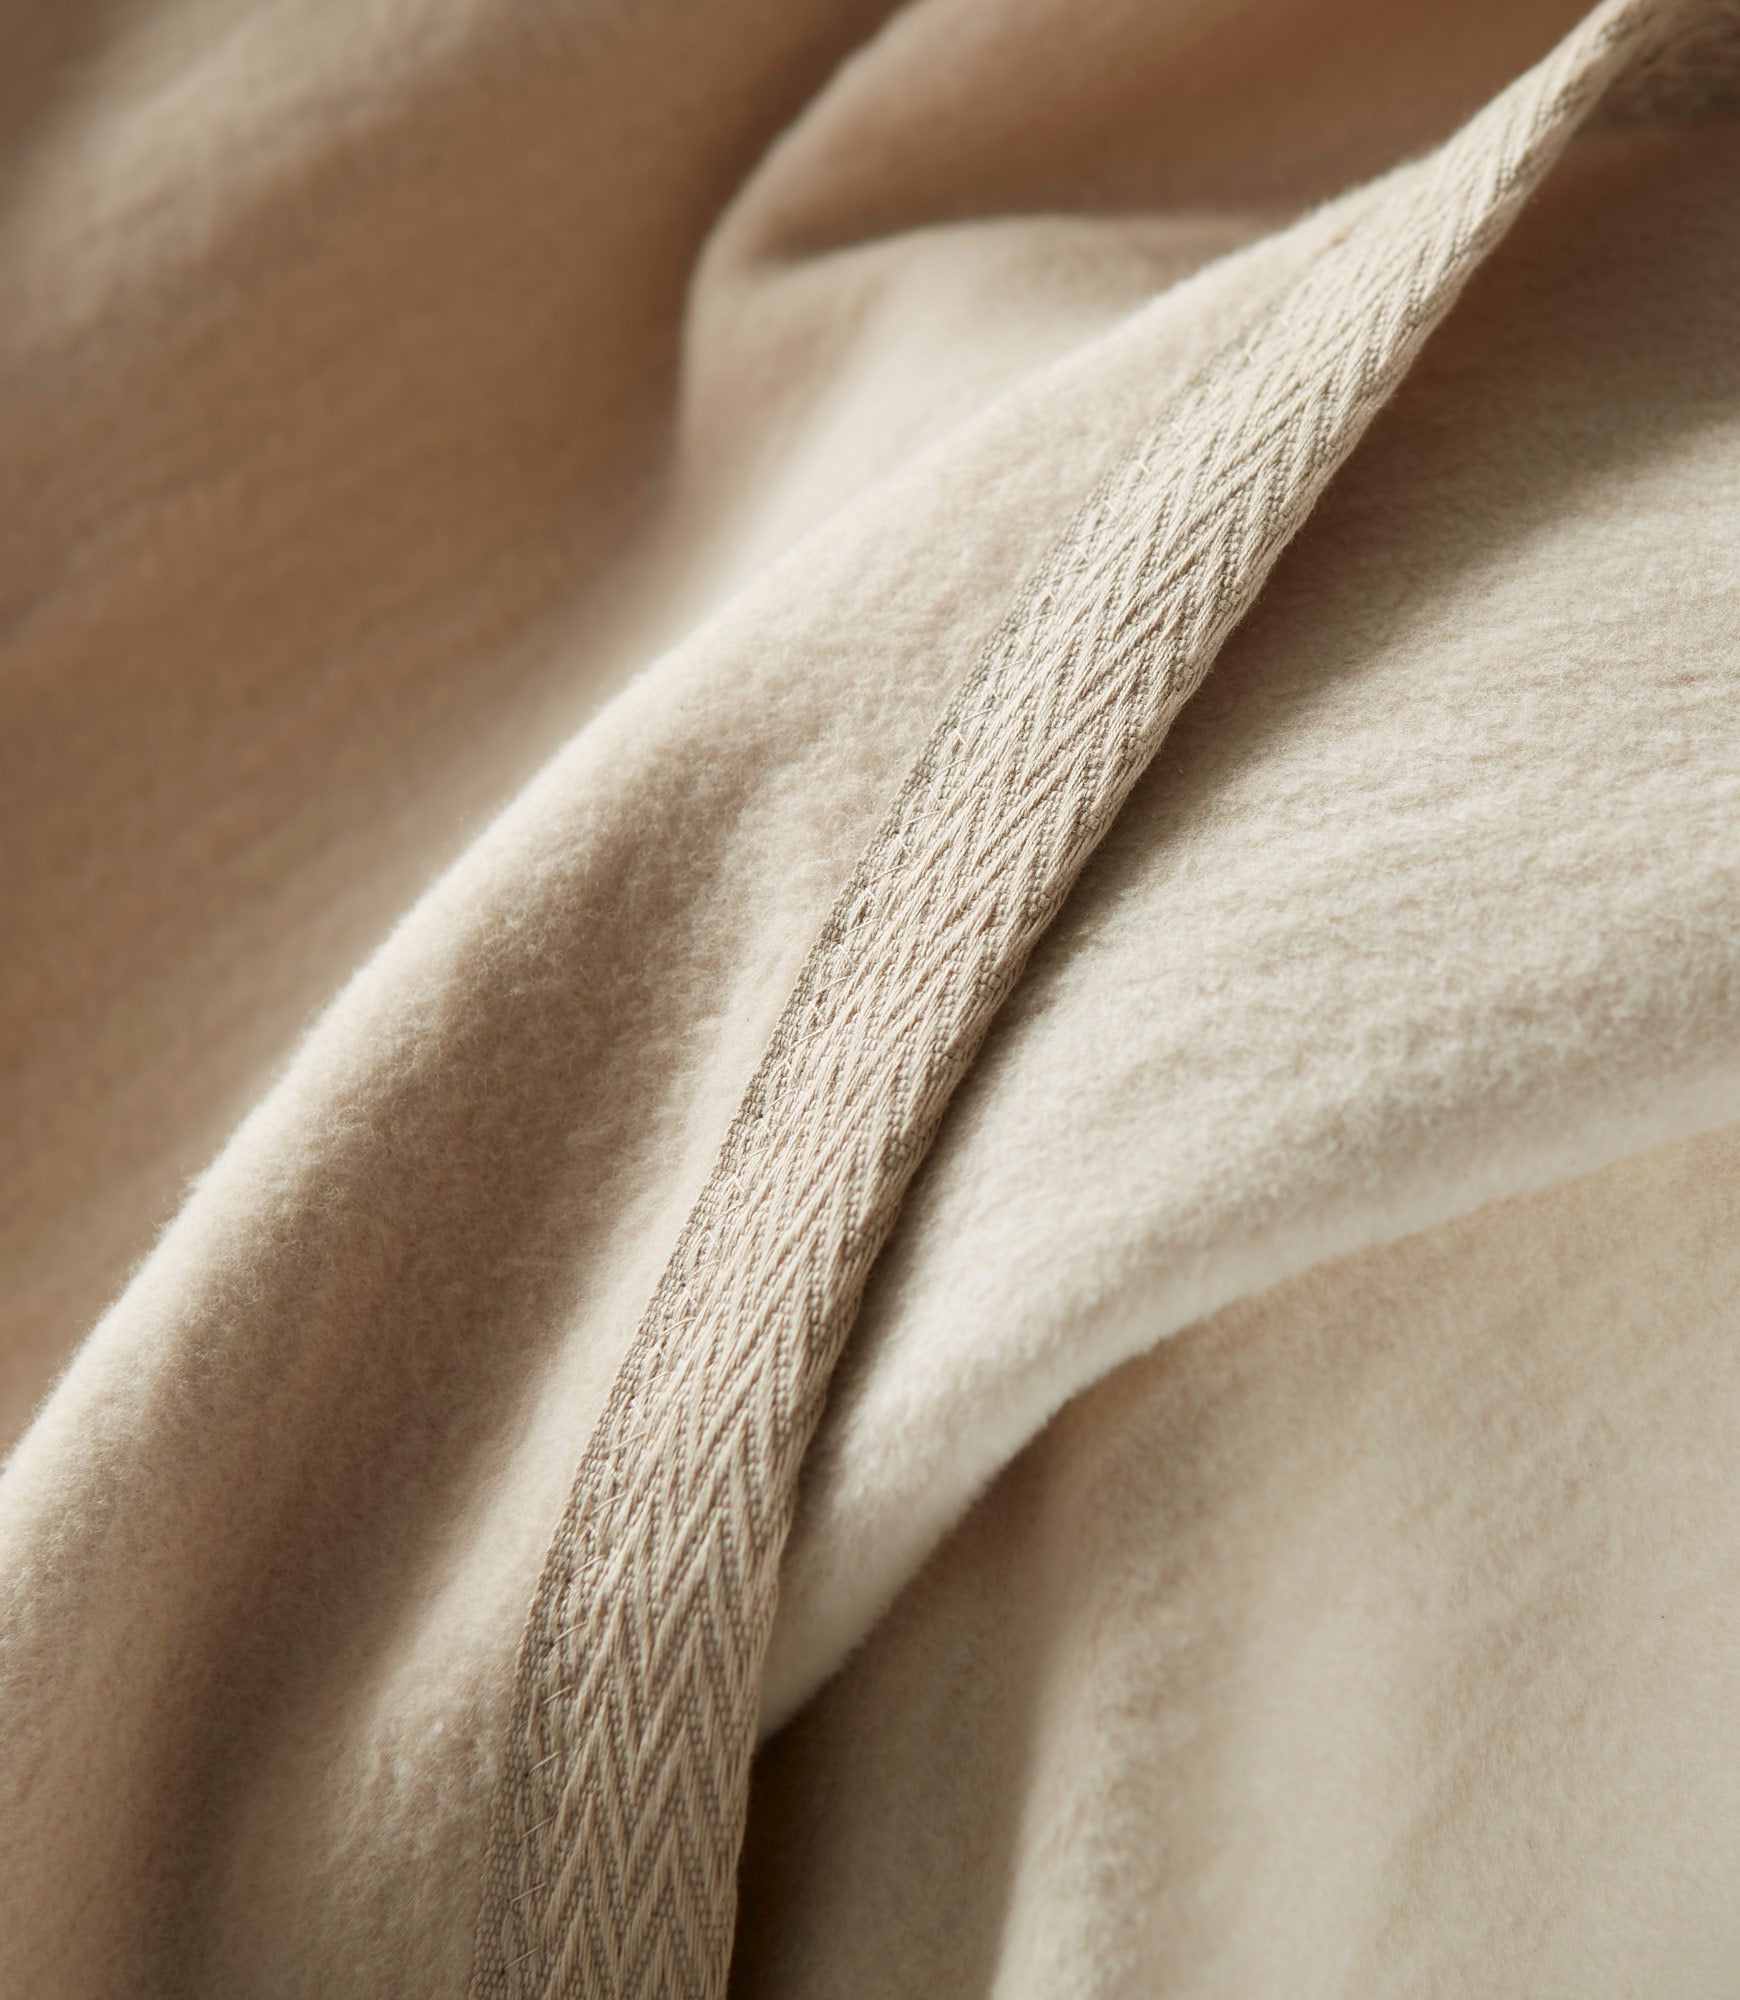 Binded edge of Favorite Reversible Cotton Blanket Linen color